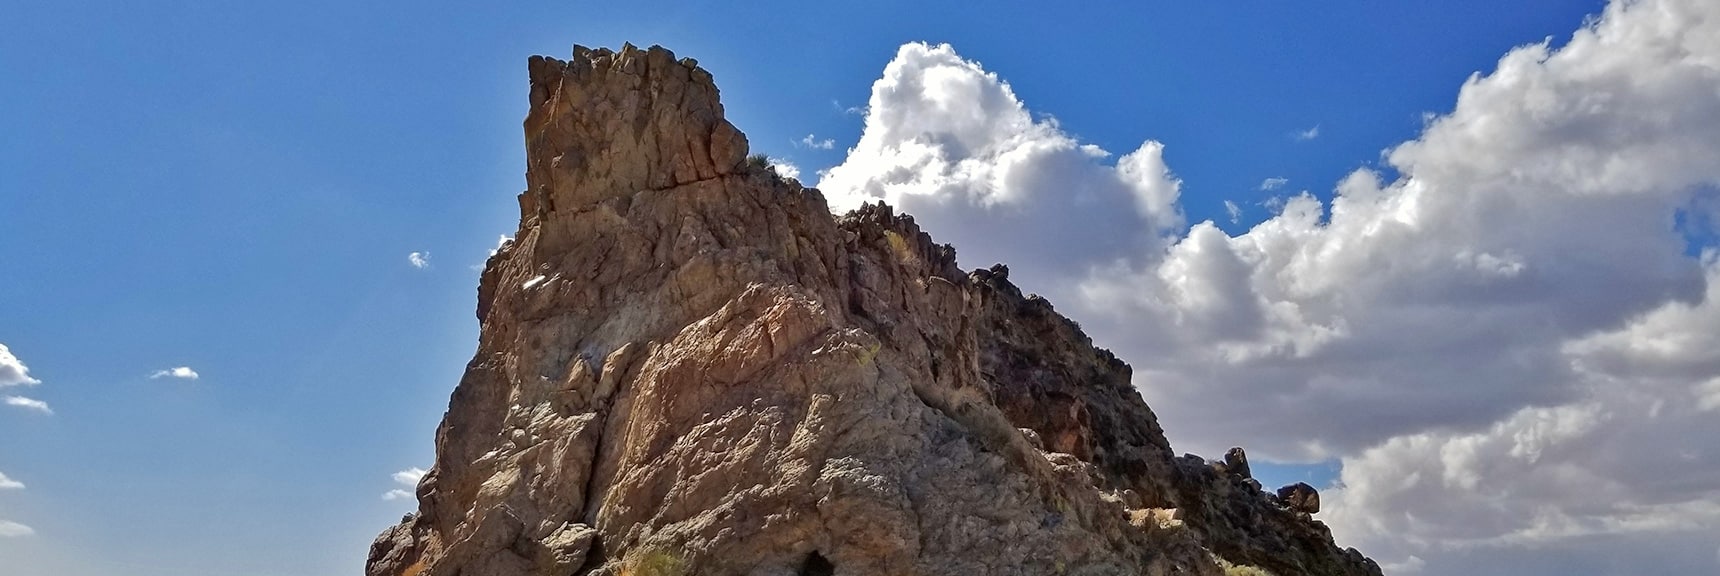 Rock Formation I Call The Black Mountains Matterhorn | Mt Wilson, Black Mountains, Arizona, Lake Mead National Recreation Area